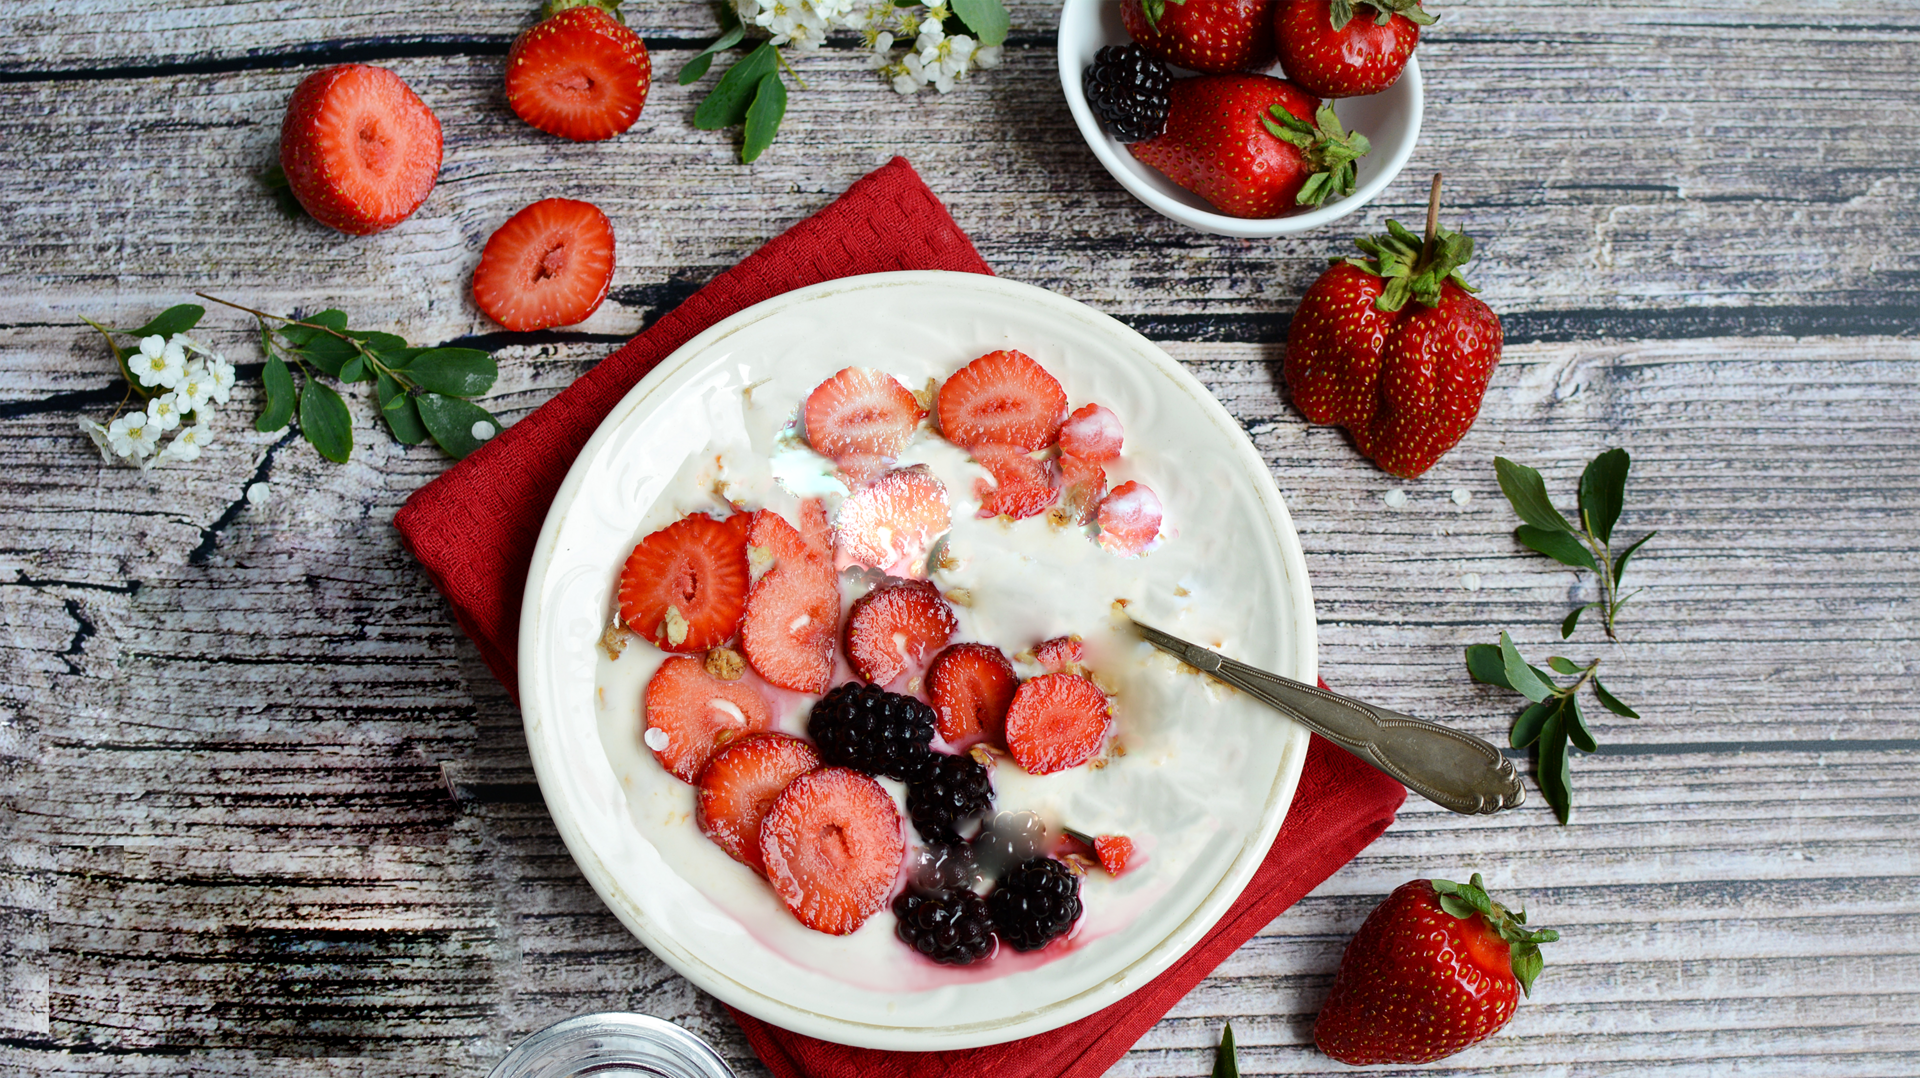 Strawberry and blackberry spoonable yogurt with caffeine, vitamin B2, B5, B6, B12, and taurine